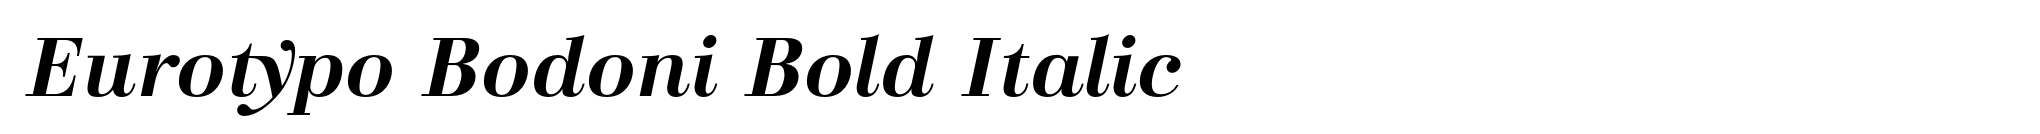 Eurotypo Bodoni Bold Italic image